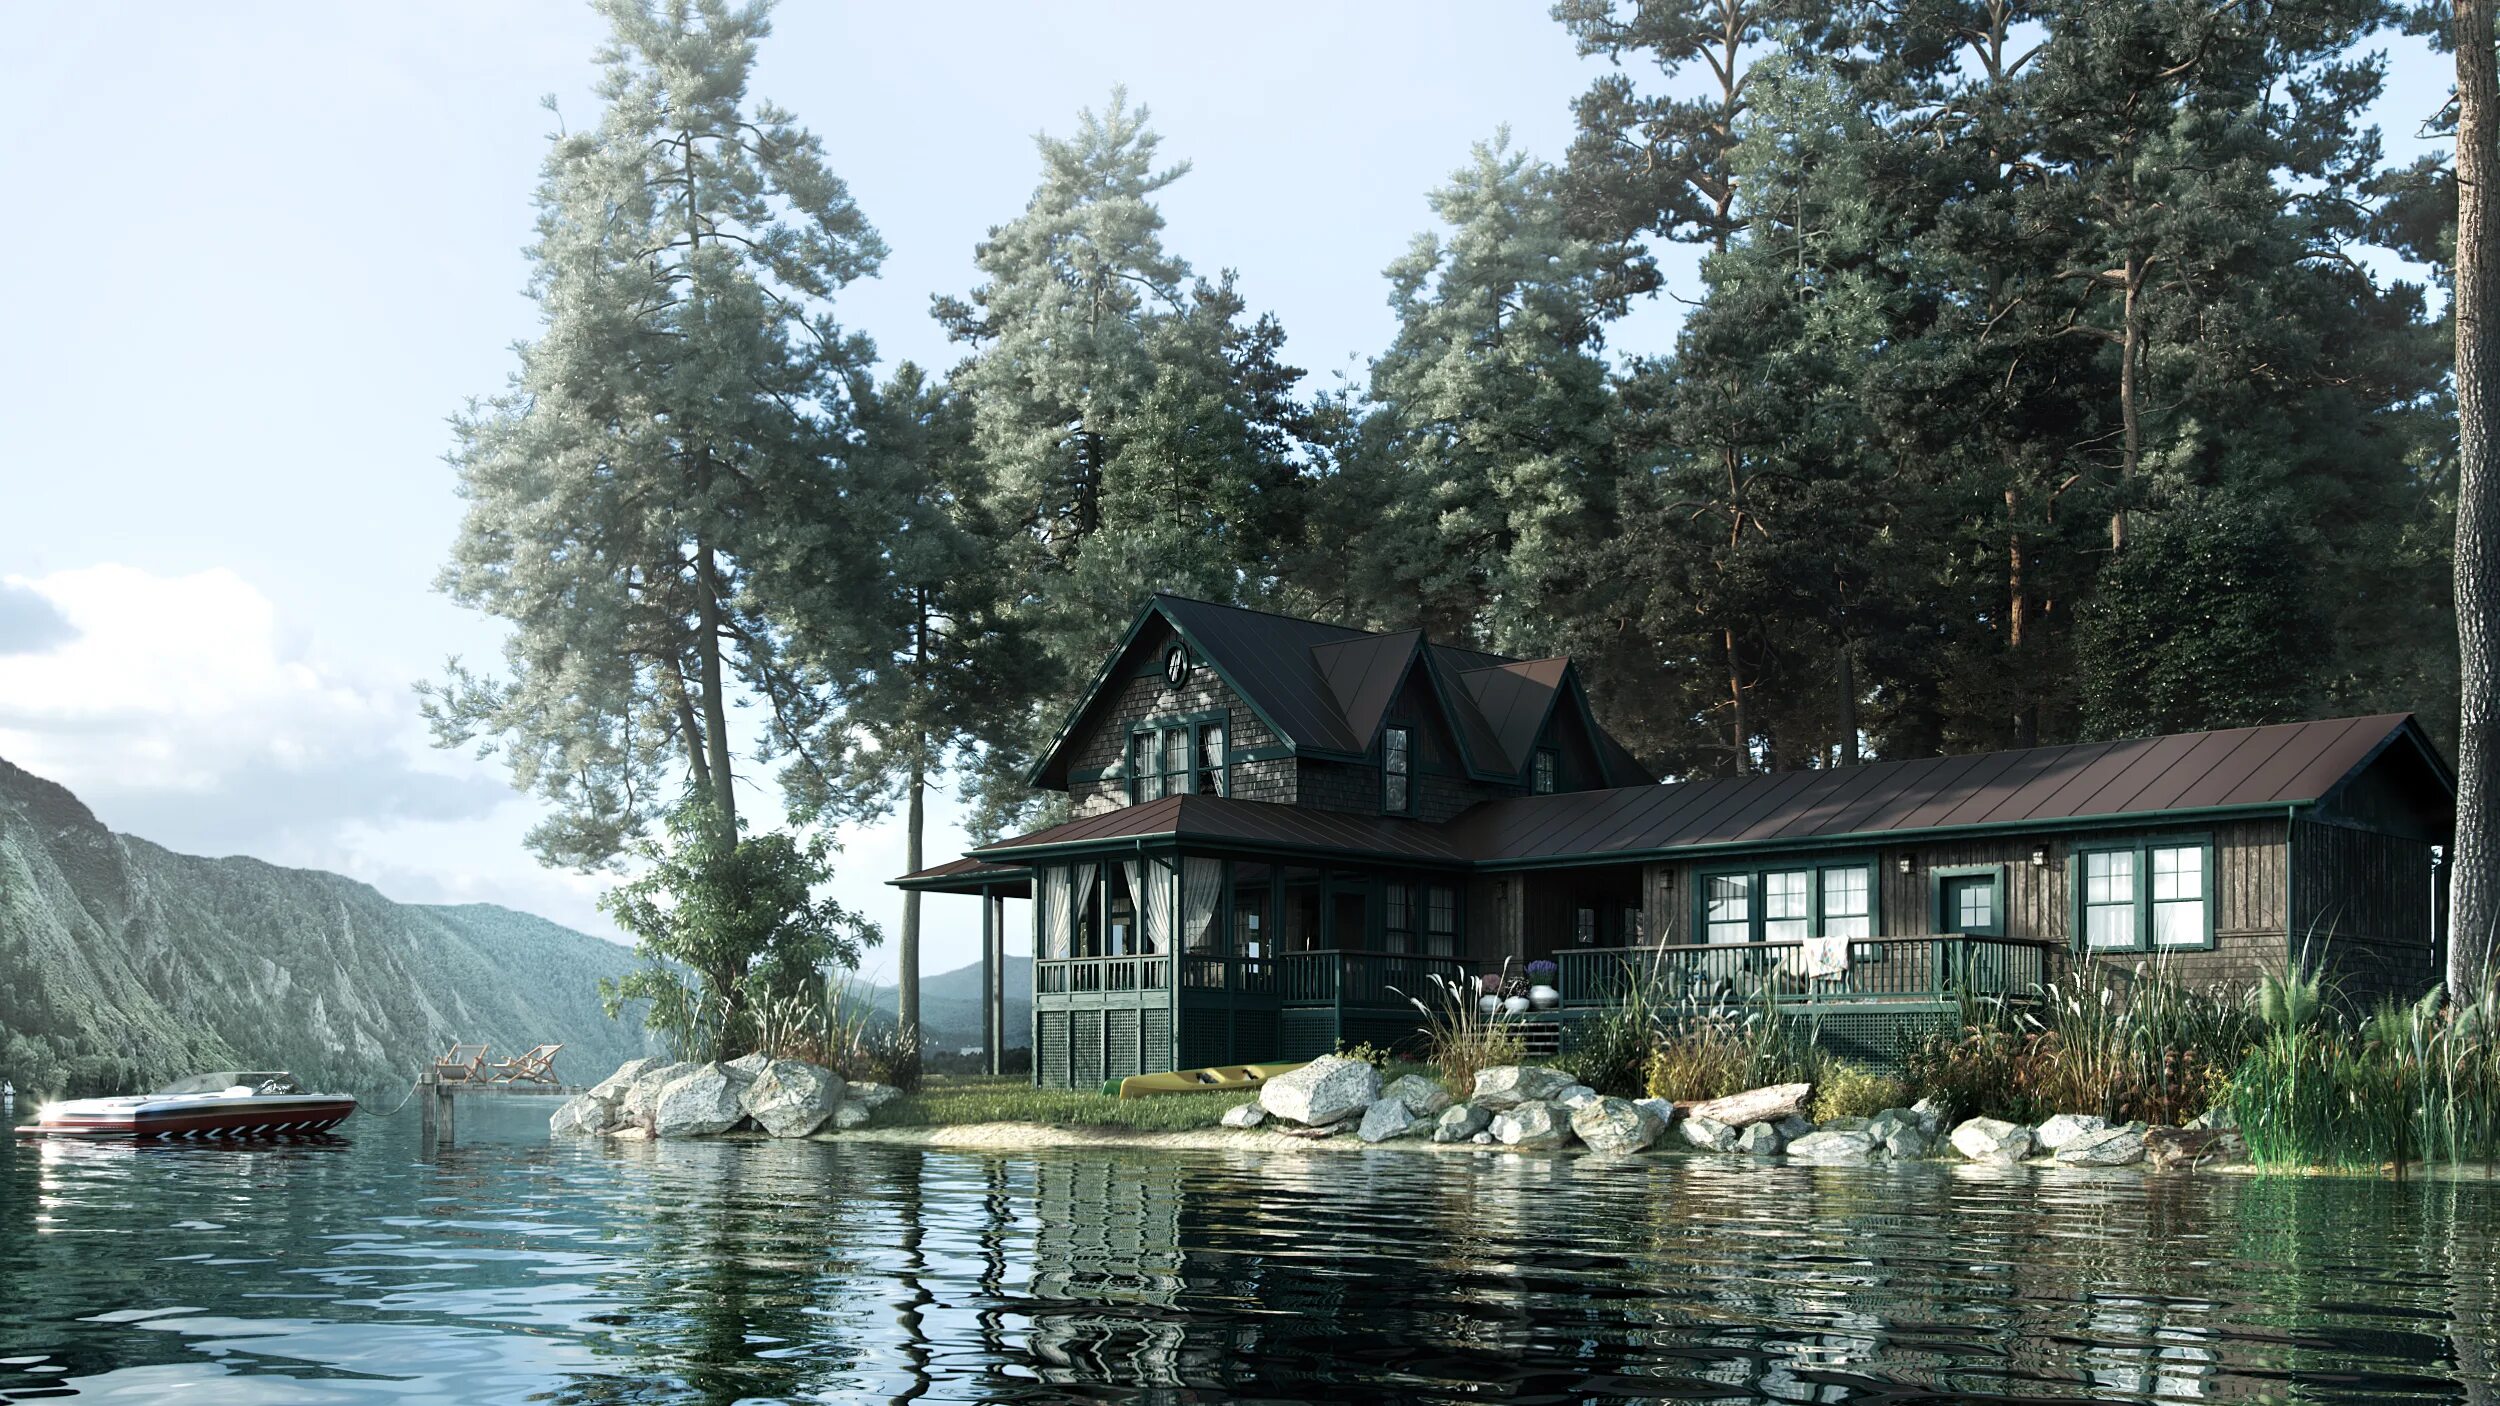 House near the lake. Онтарио Канада коттеджи у озера. Кедр Хаус Телецкое озеро. Дом у озера (США, 2006).